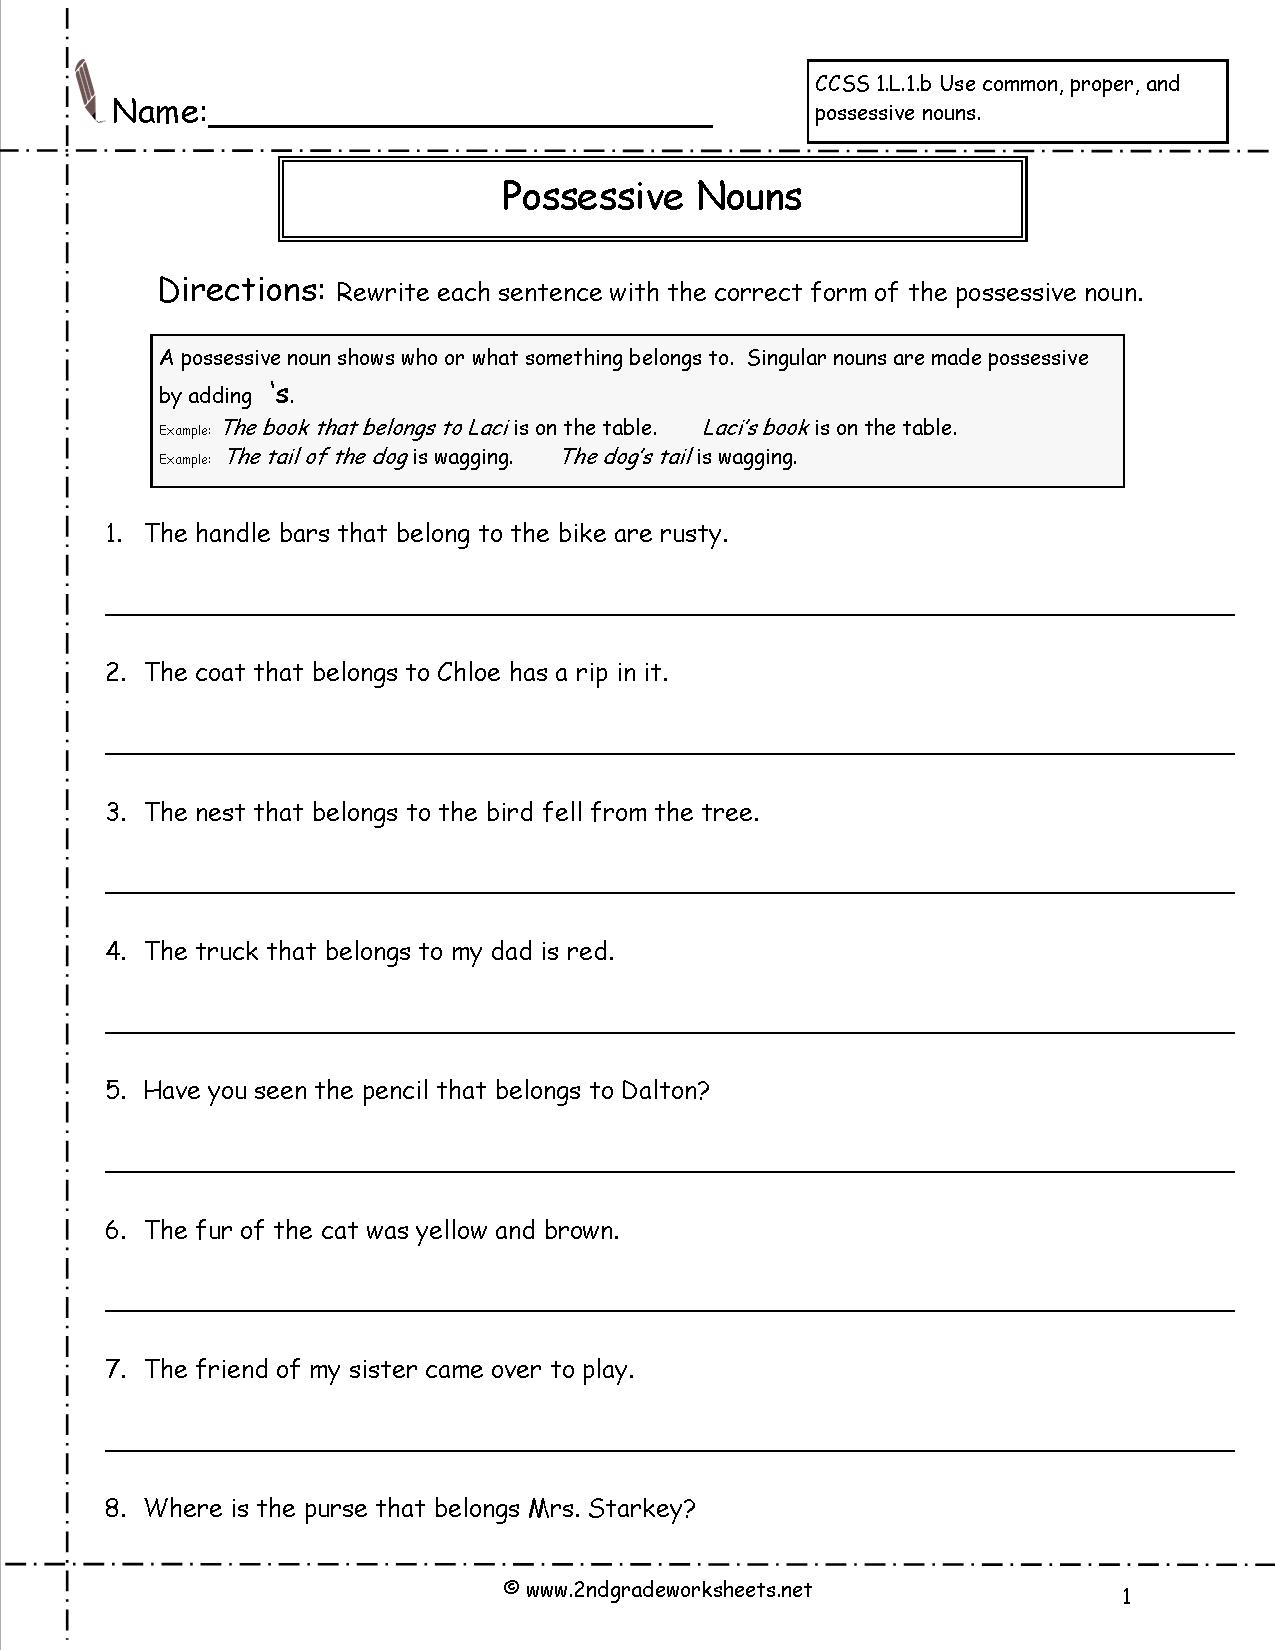 possessive-pronouns-worksheets-for-grade-1-pdf-worksheets-for-kids